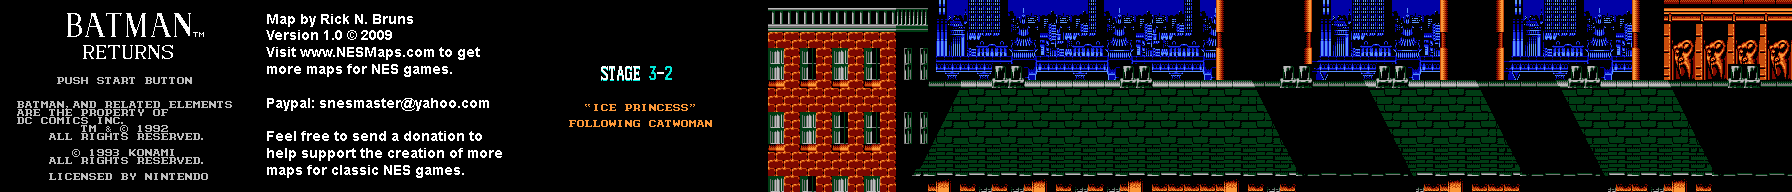 Batman Returns - Stage 3-2 - Nintendo NES Background Only Map